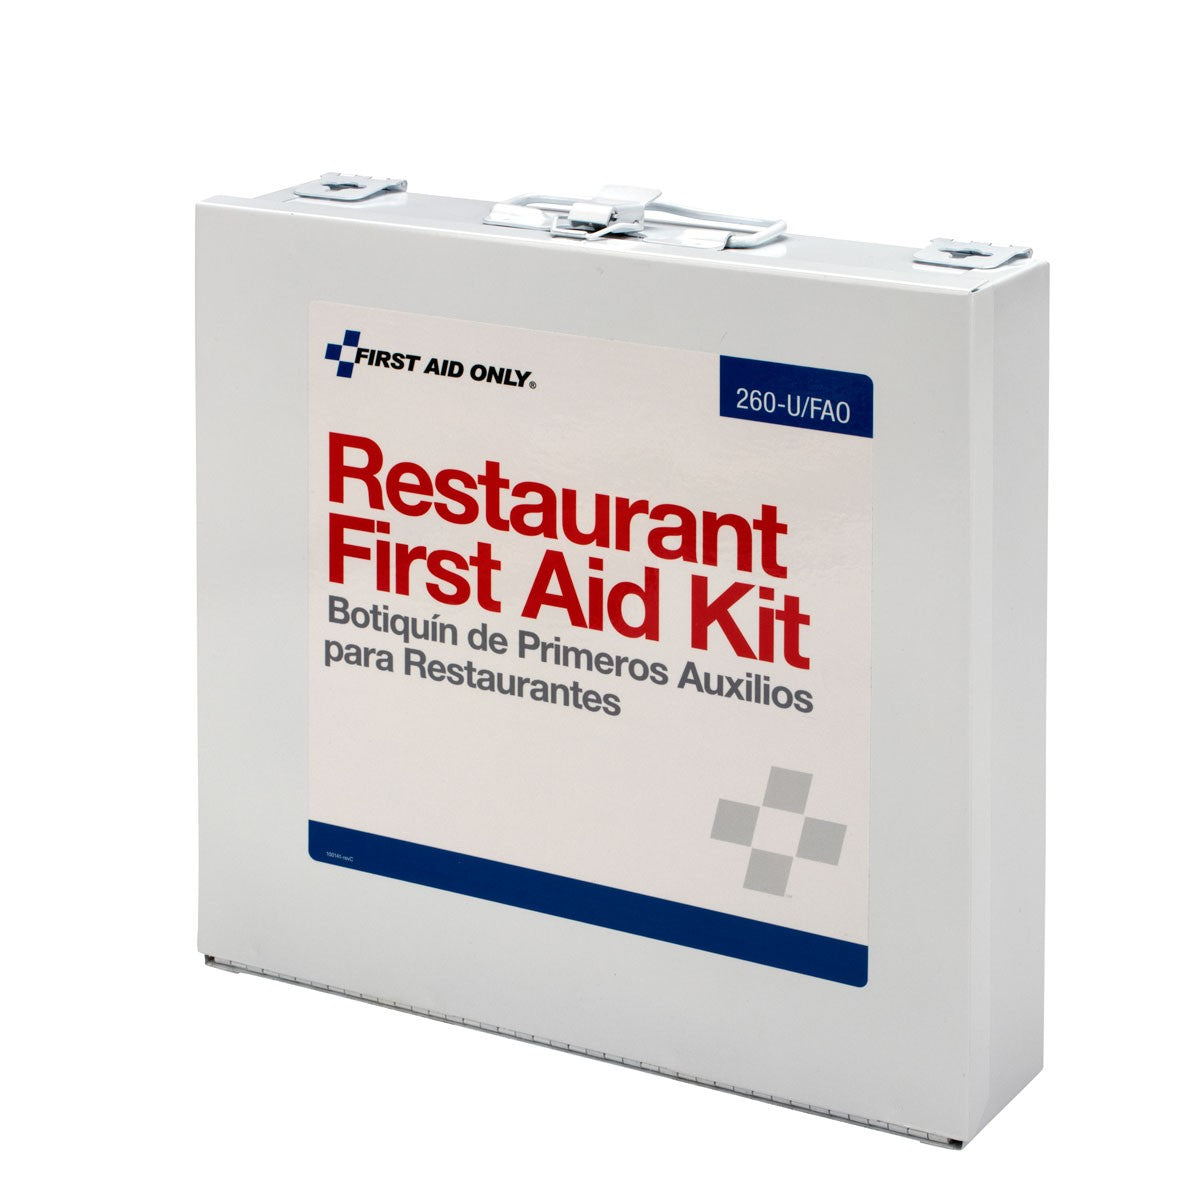 75 Person Restaurant First Aid Kit, Metal Case - BS-FAK-260-U/FAO-1-FM